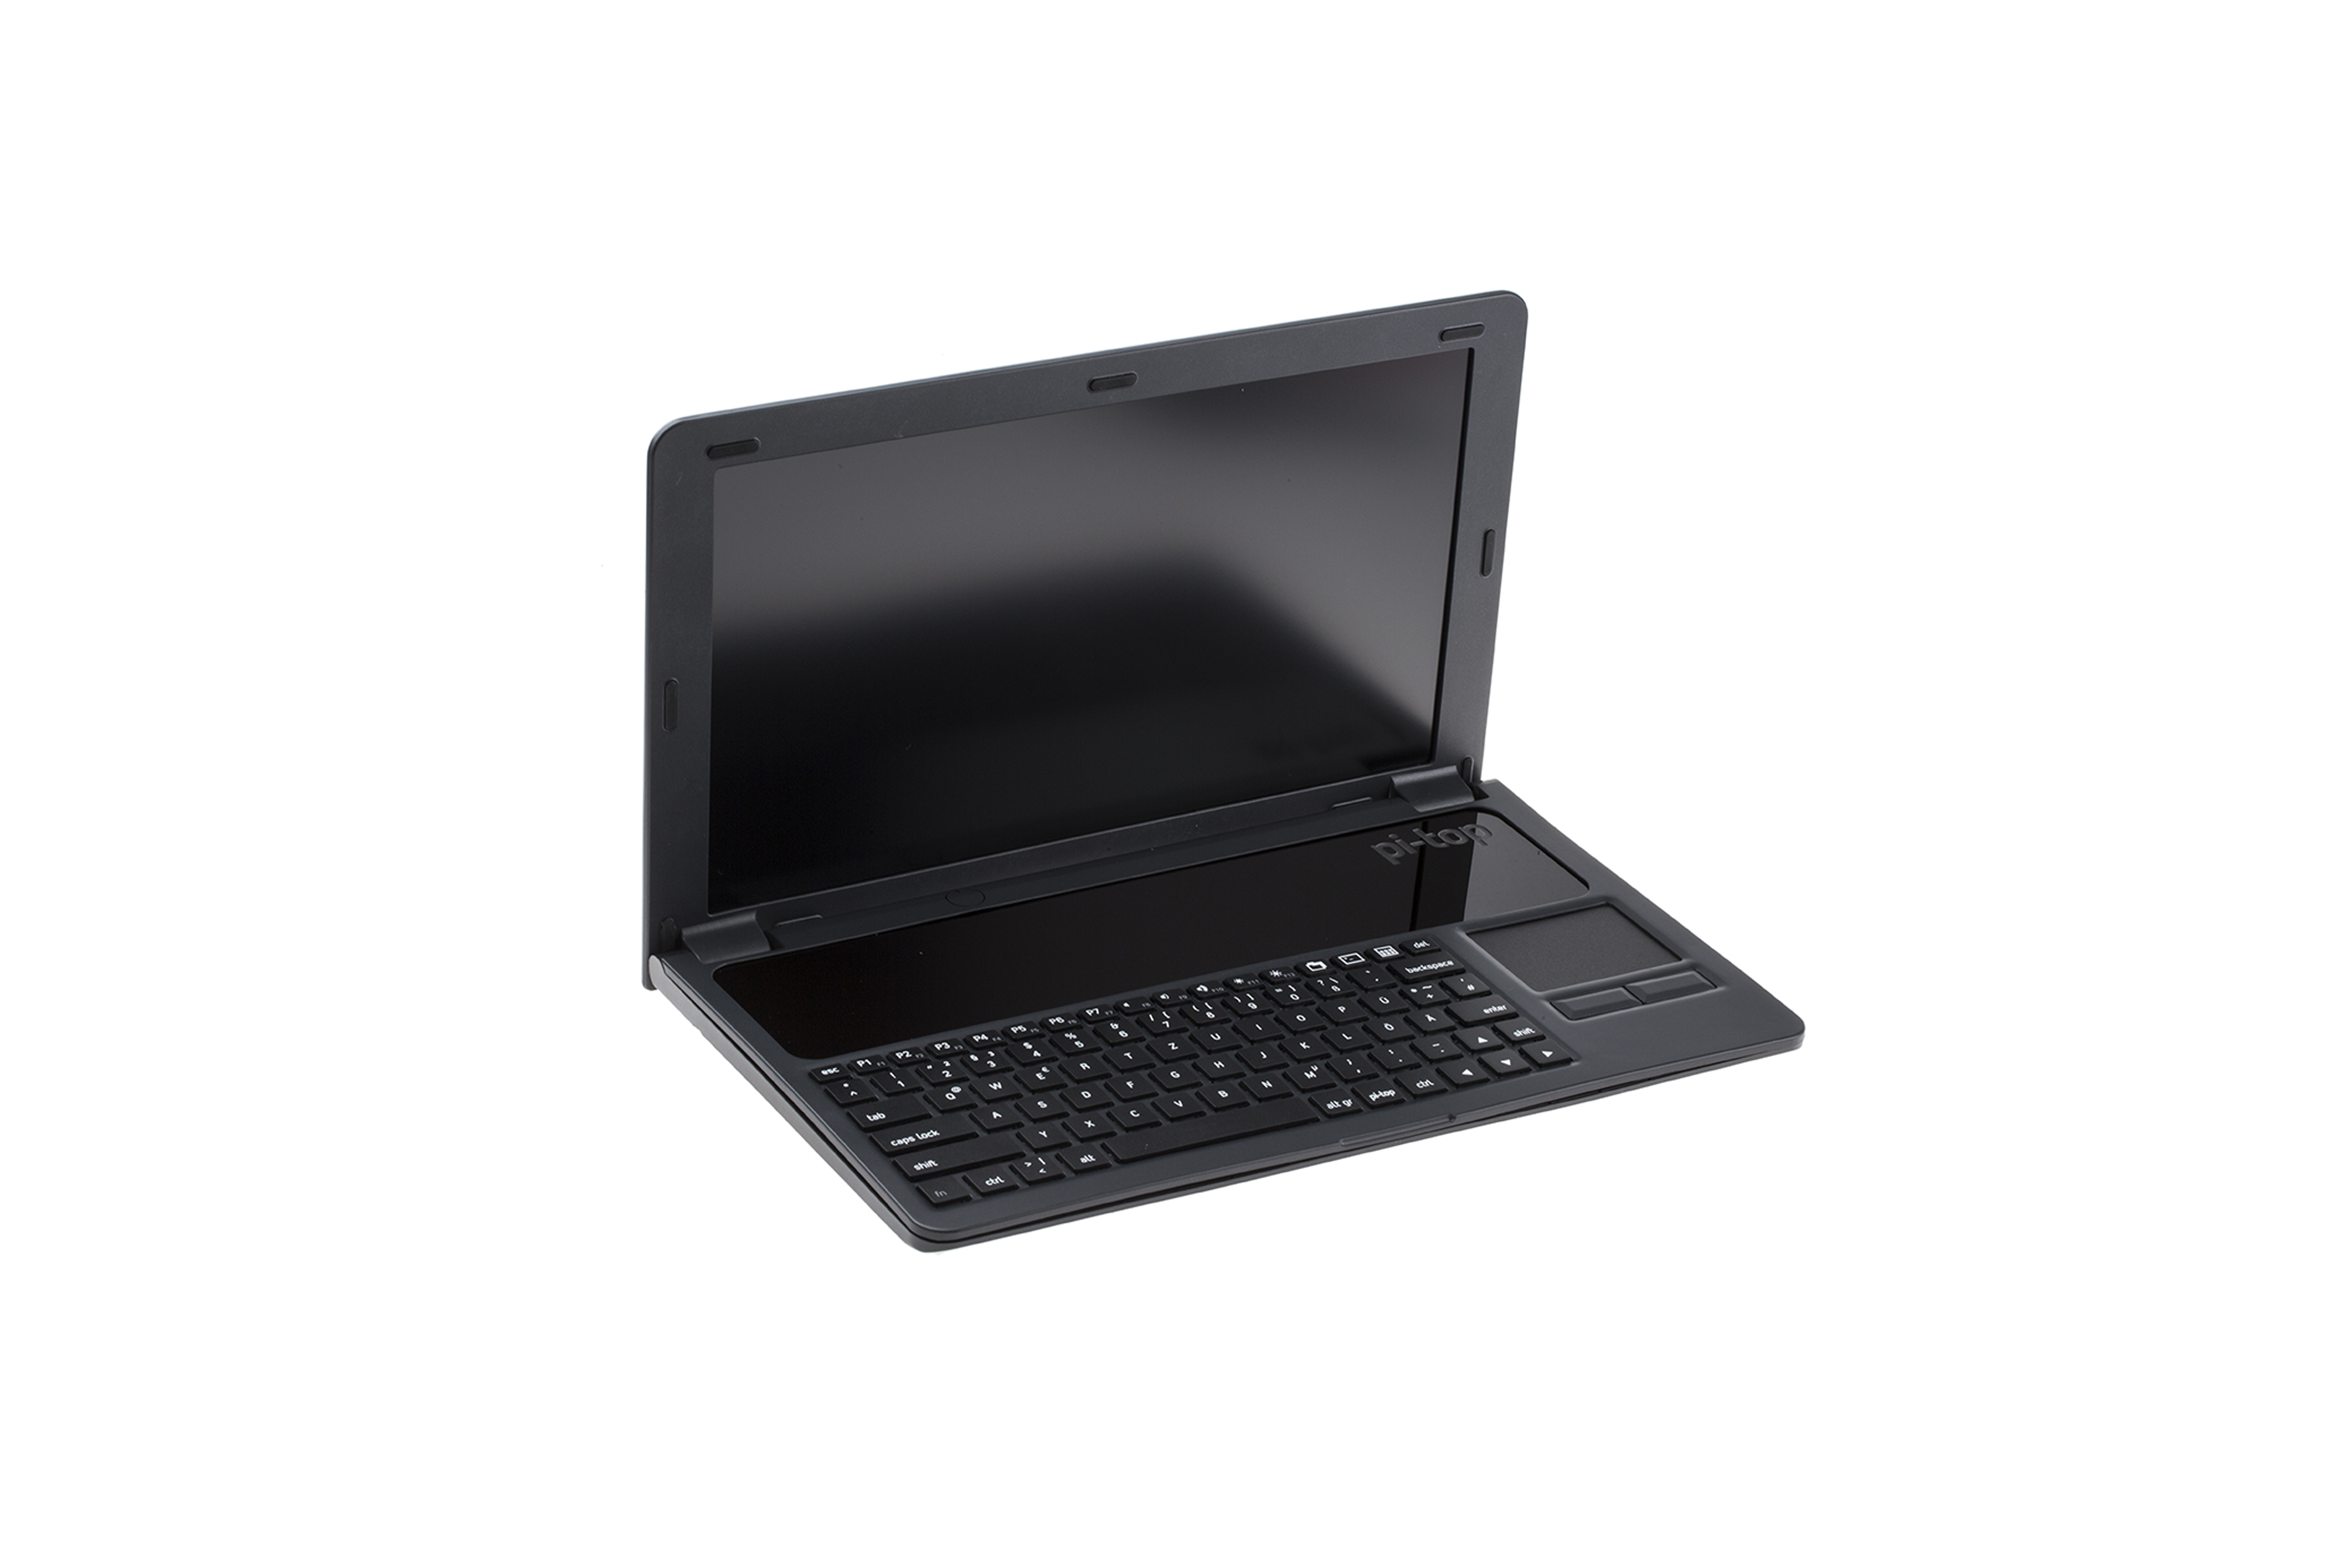 Pi-Top Raspberry Pi Laptop - German Keyboard - Grey